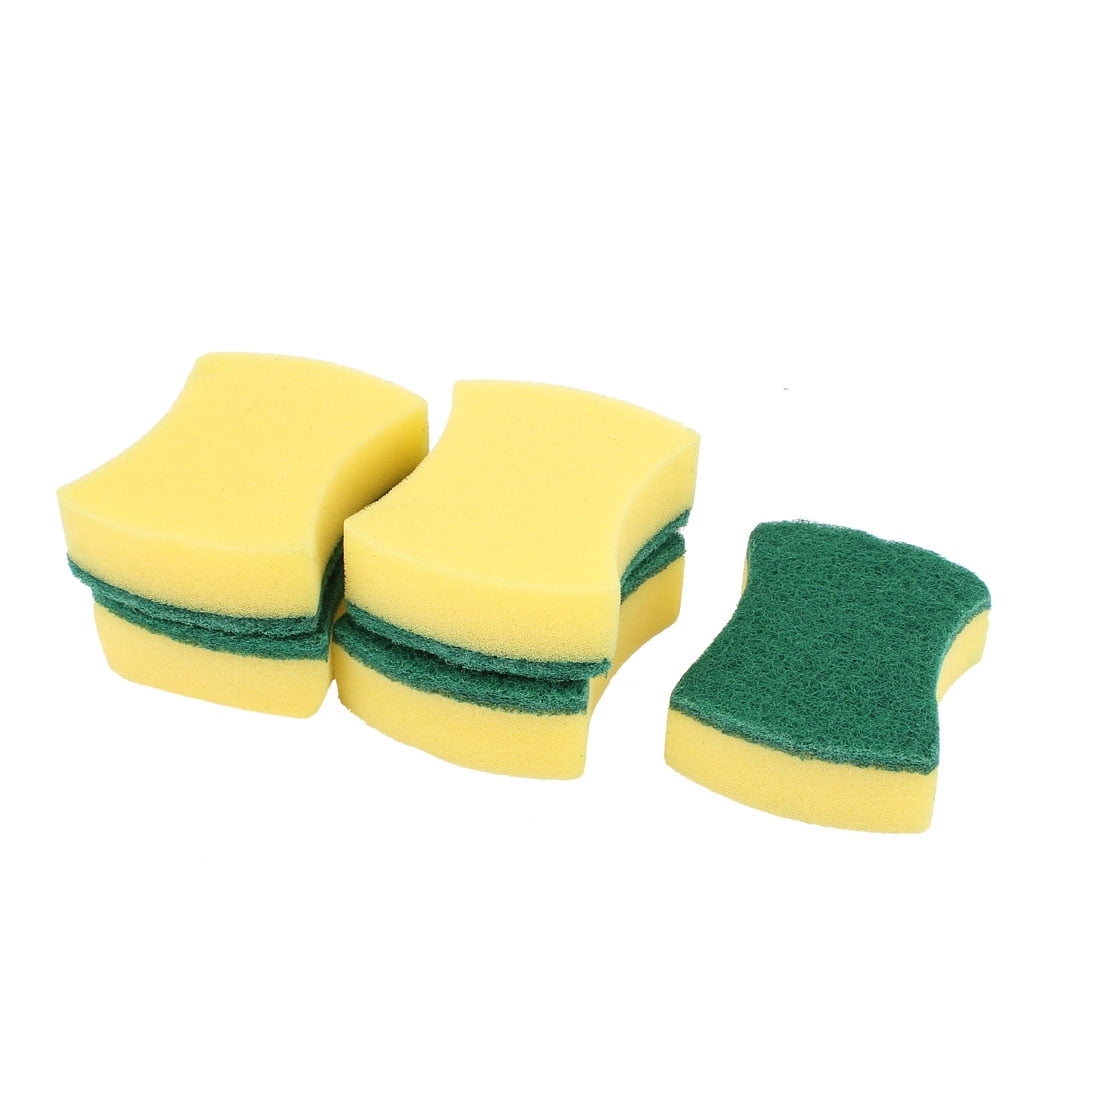 Libman 1482 Microfiber Sponge Cloths - Combines The Best of A Sponge and Dish Cloth, Includes 3 Packs of 3 Sponge Cloths (9 Tota